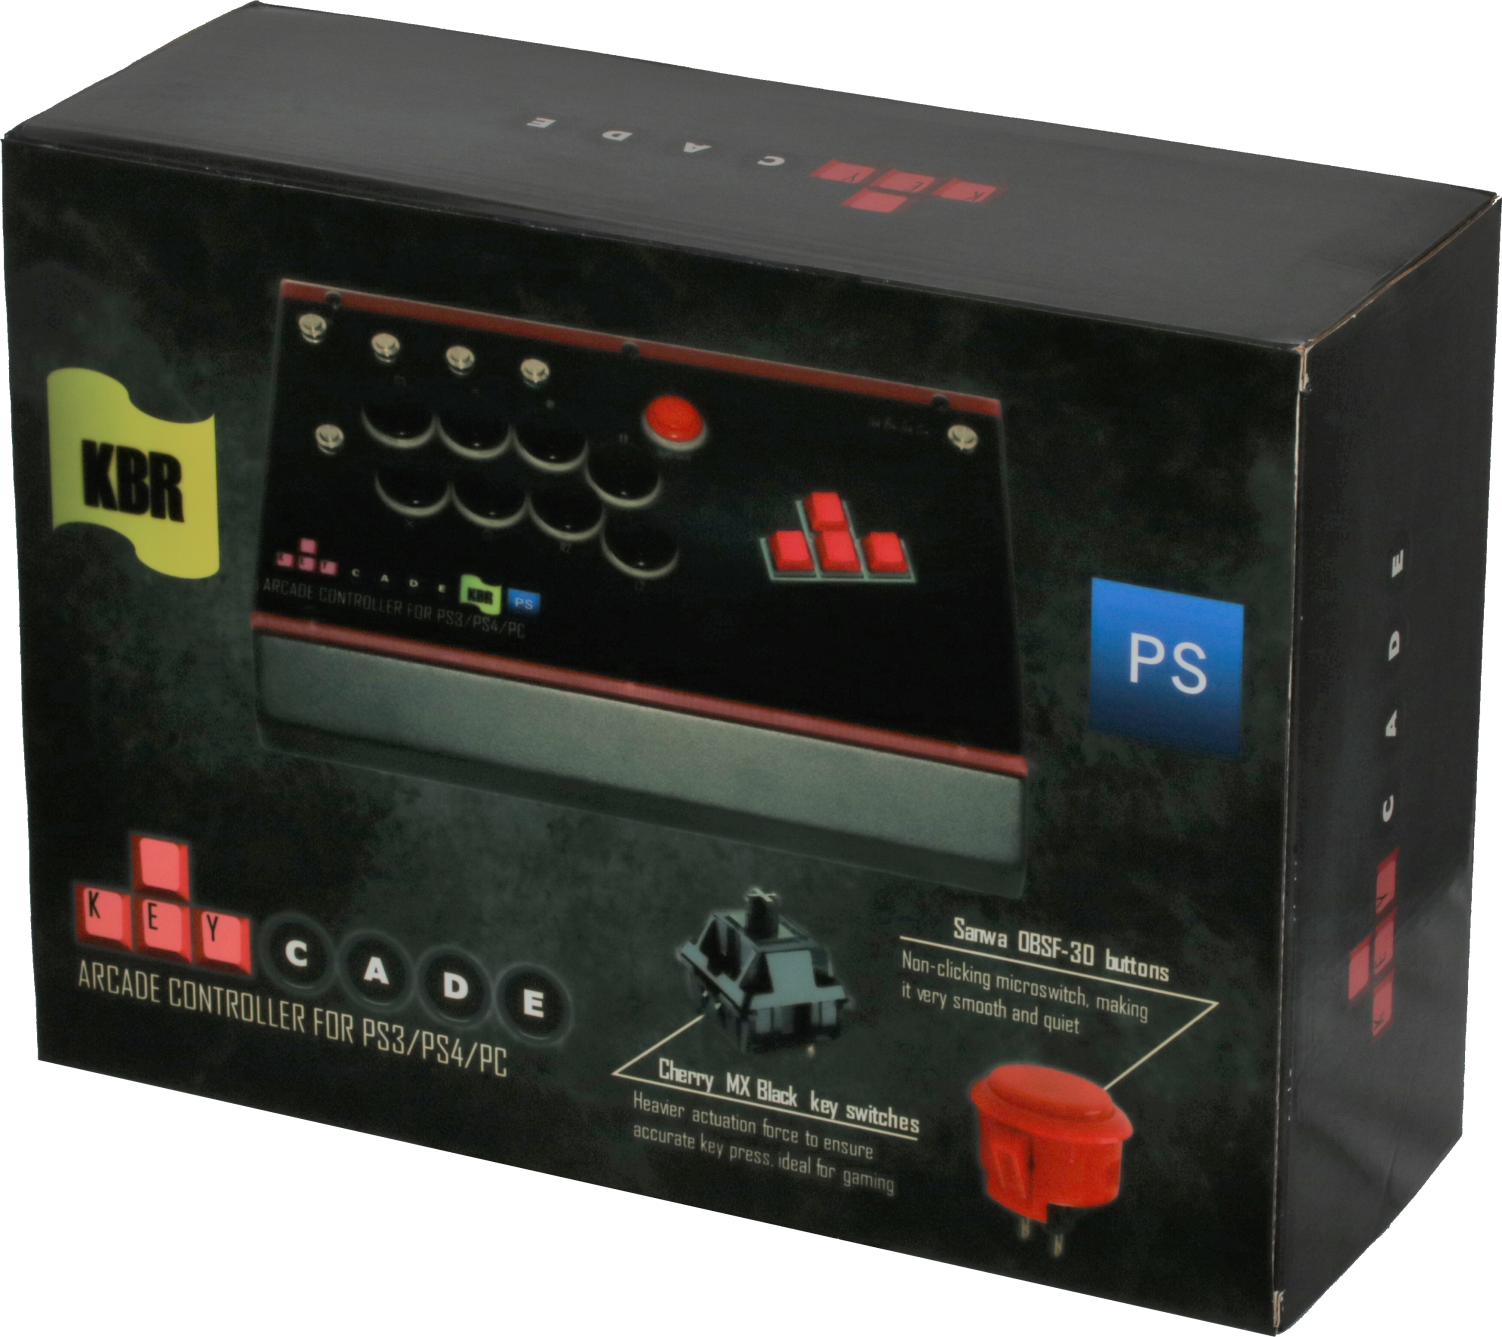 KeyCade KBR PS5 arcade controller